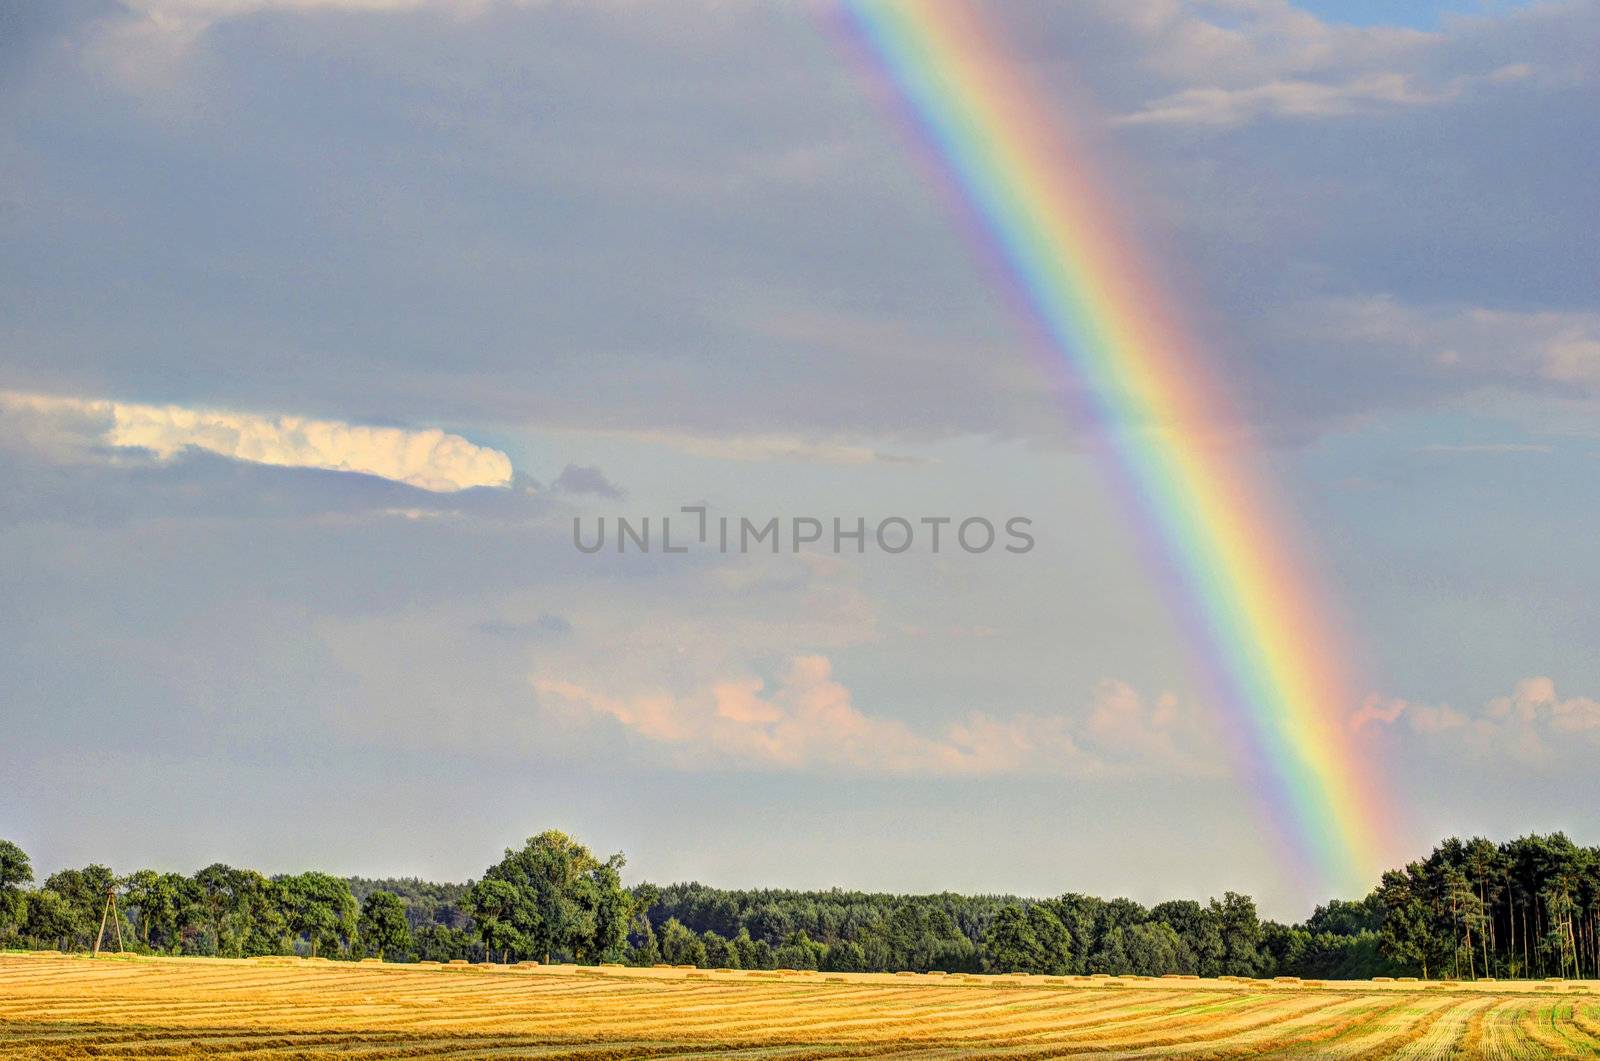 This photo present Rainbow over the stubble.